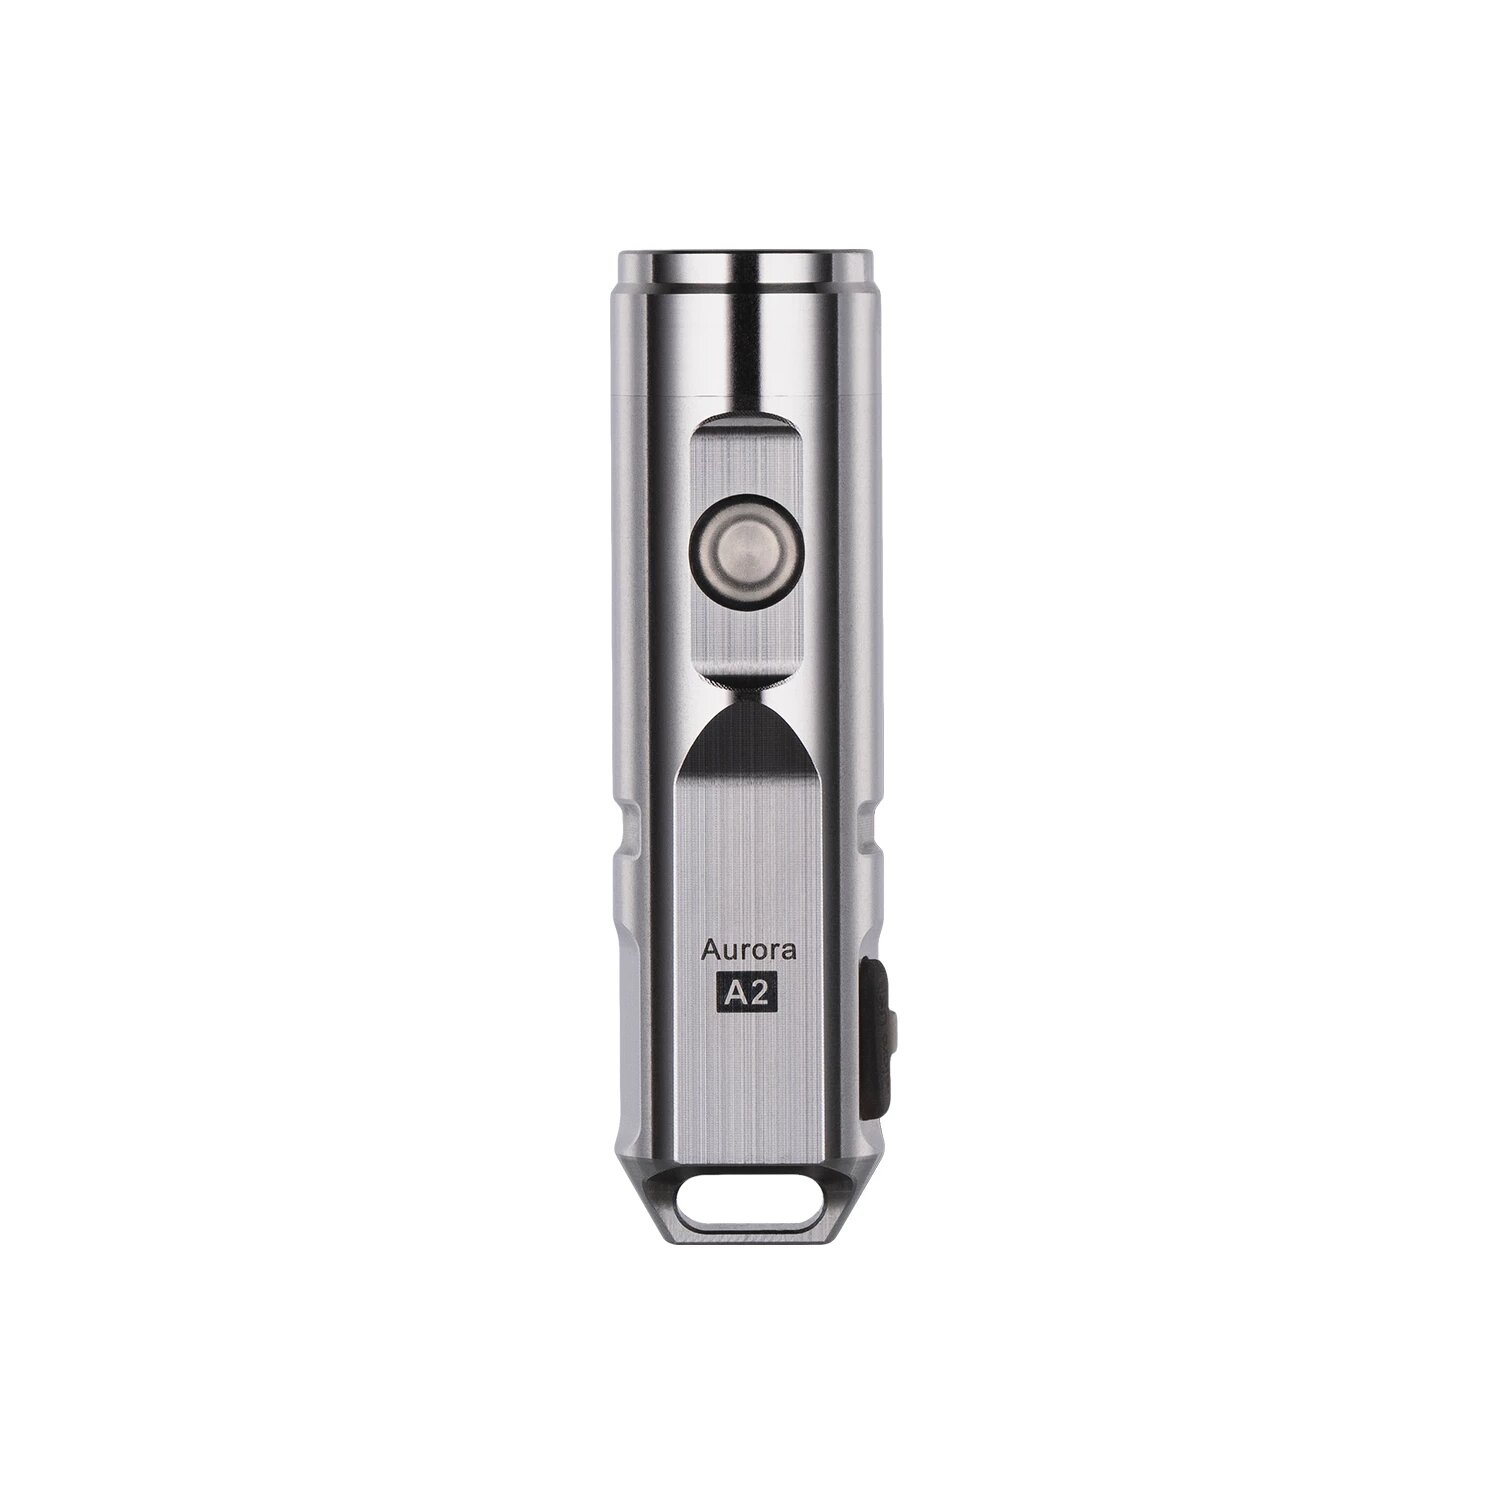 

RovyVon® Aurora A2x Nichia 219C 450Lumens Stainless Steel USB Rechargeable EDC Flashlight IP65 Waterproof LED Keychain